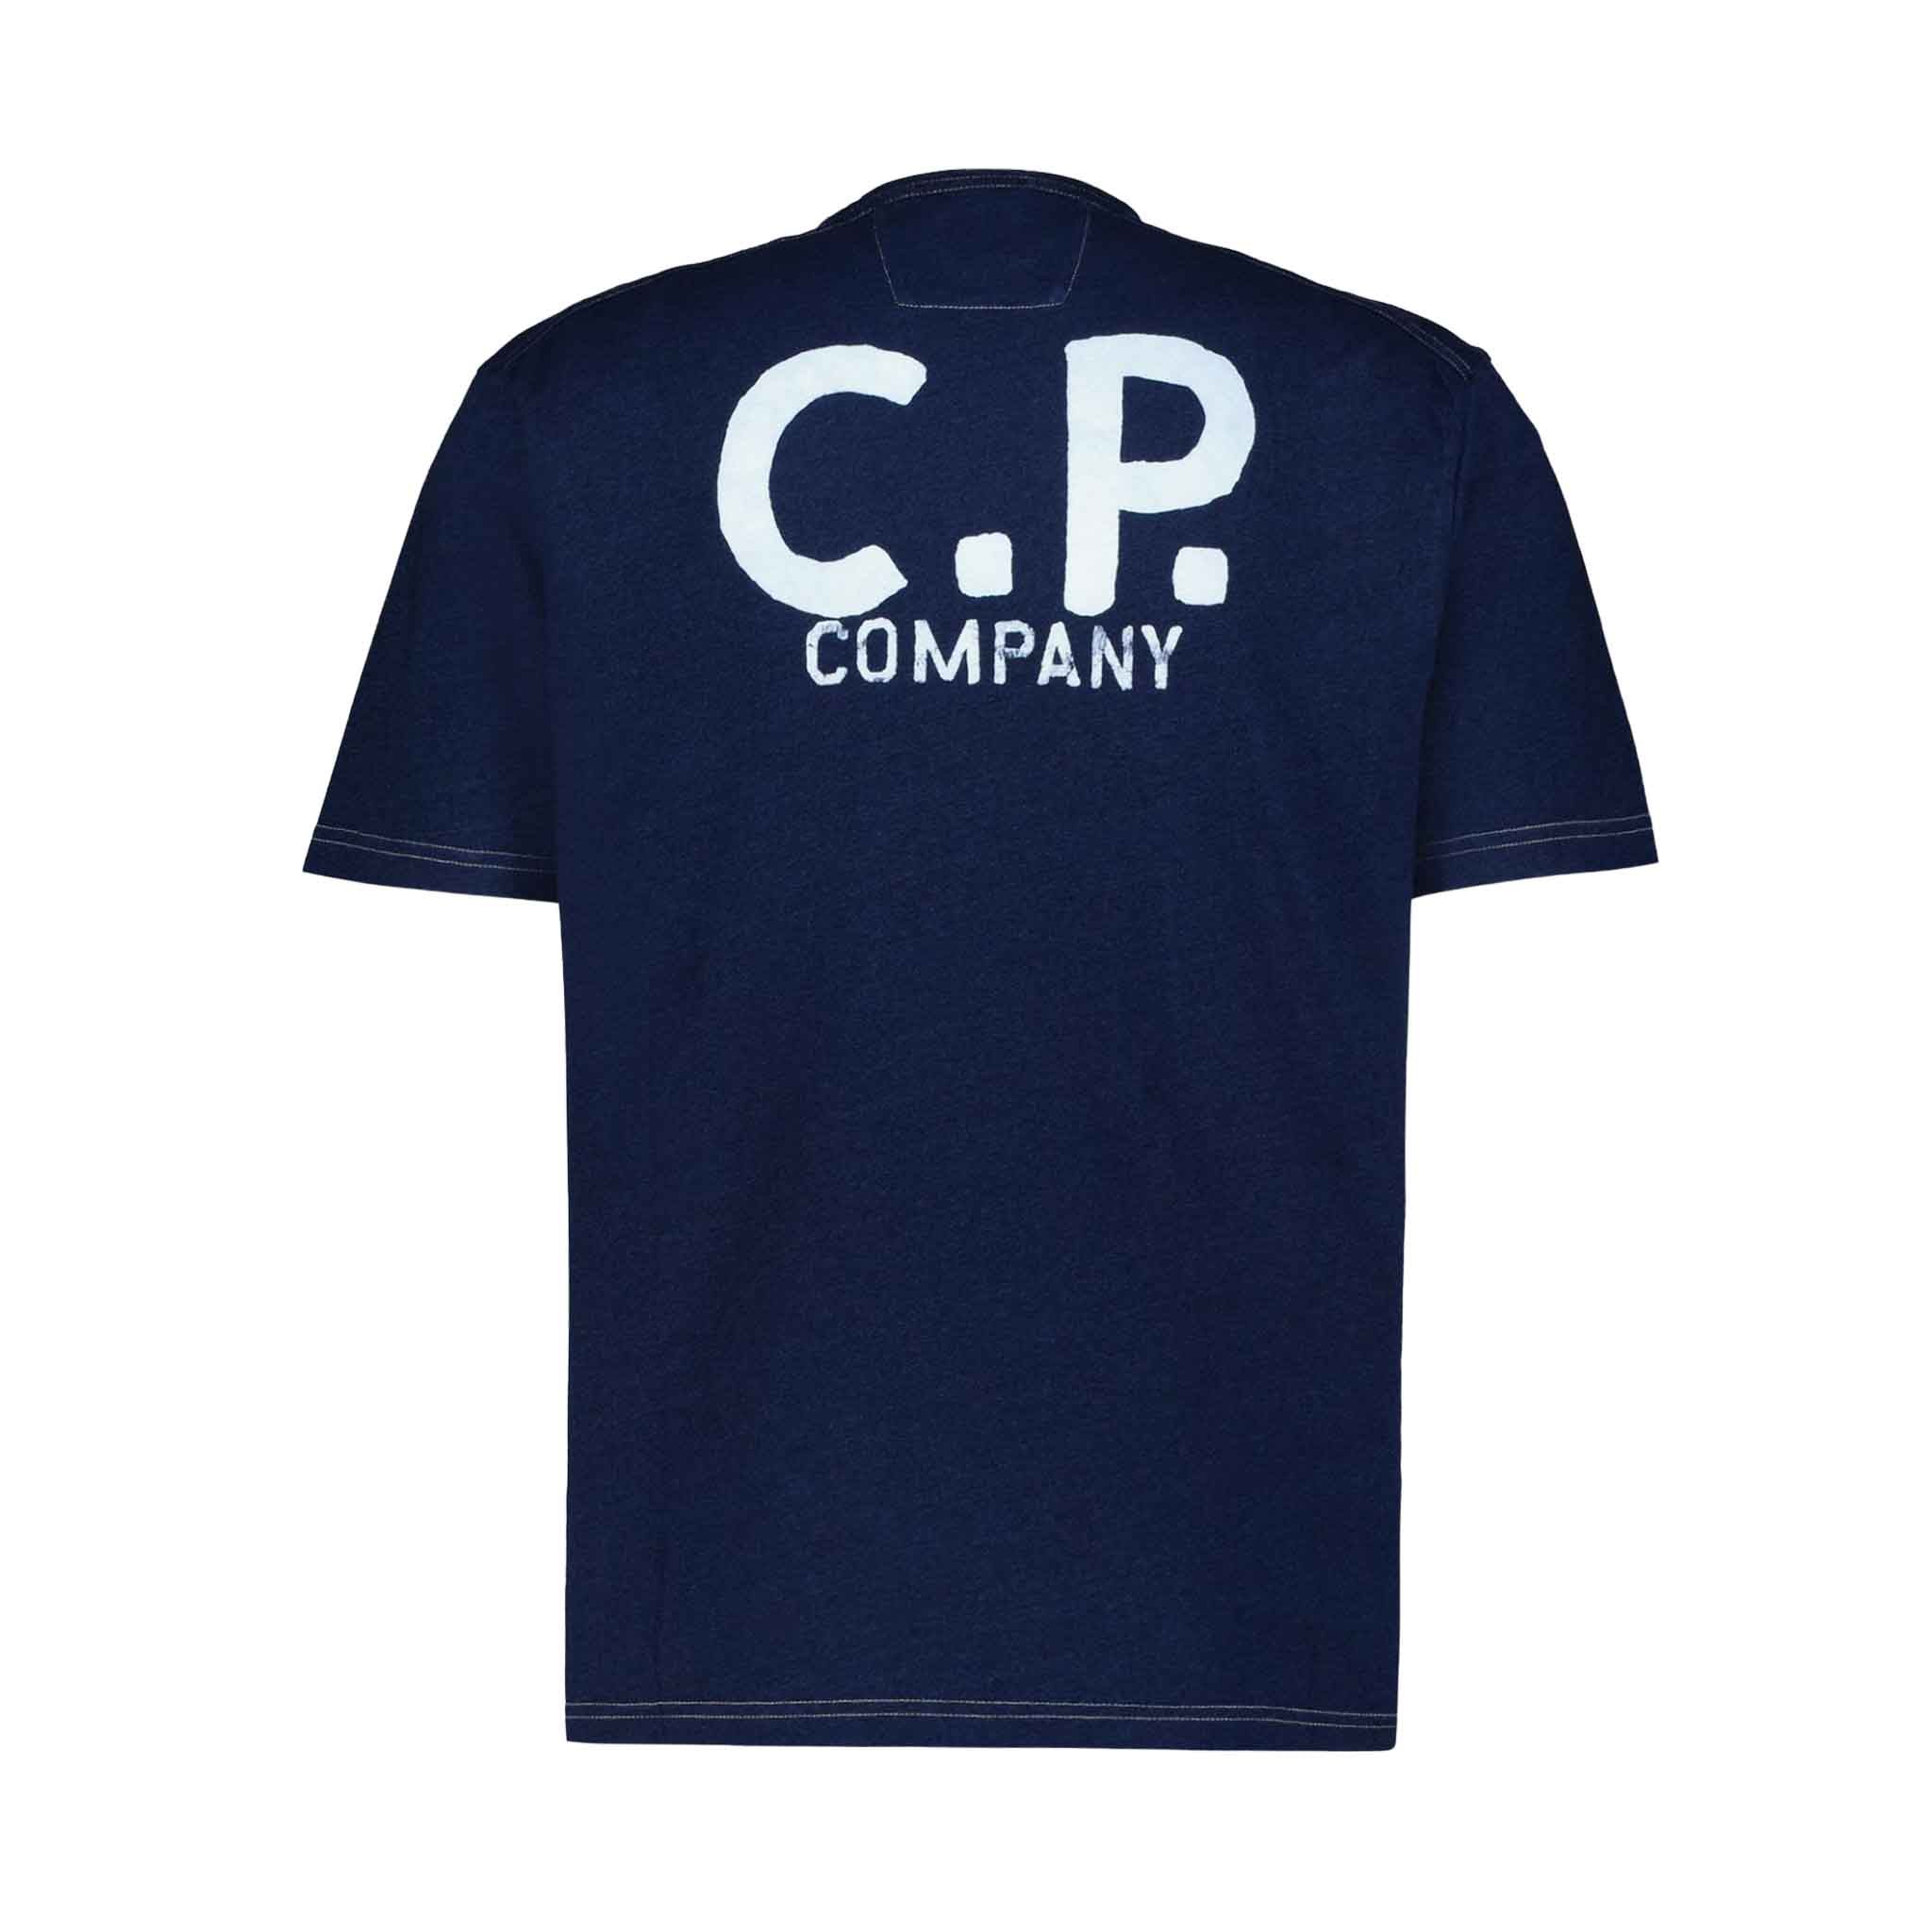 C.P. Company Indigo Jersey Sailor T-shirt in Indigo Blue